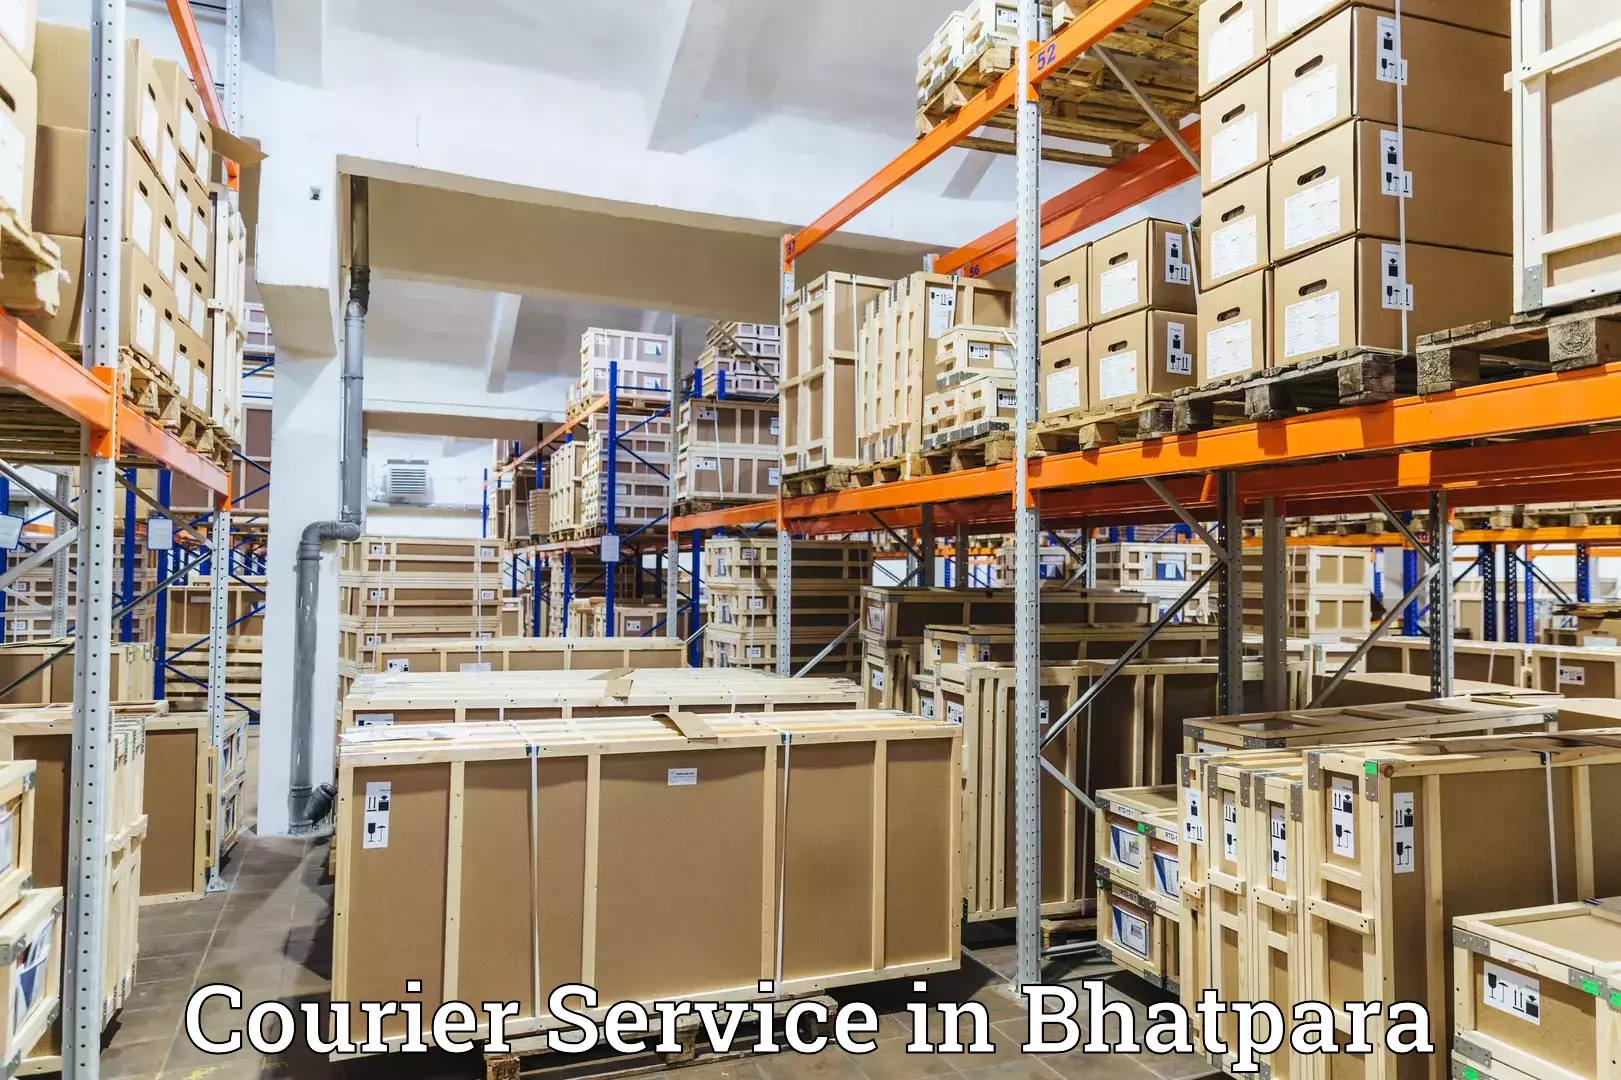 Doorstep delivery service in Bhatpara